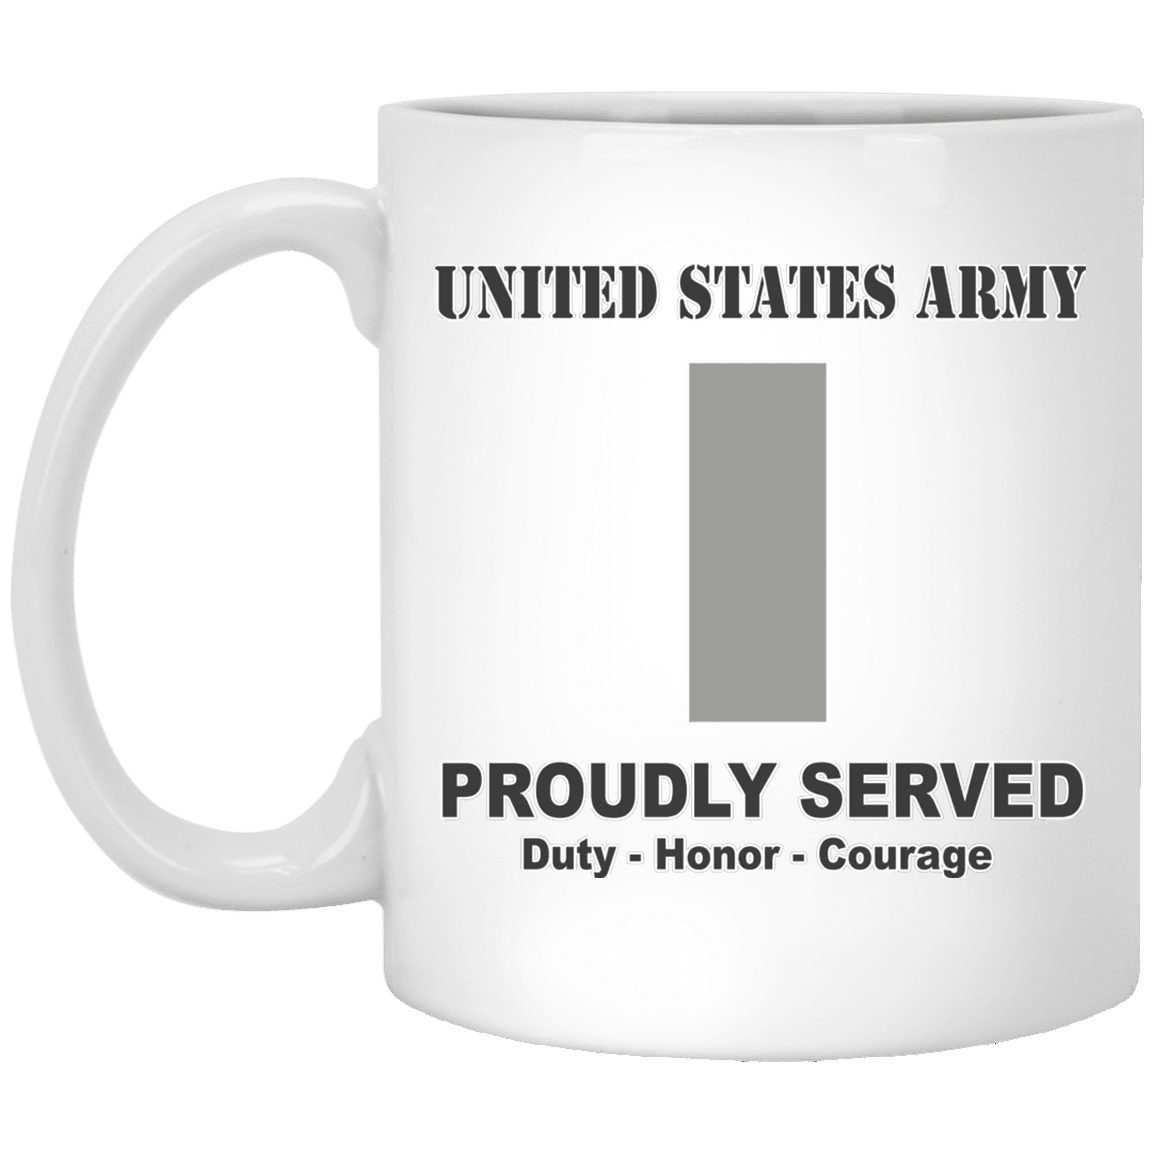 US Army O-2 First Lieutenant O2 1LT Commissioned Officer Ranks White Coffee Mug - Stainless Travel Mug-Mug-Army-Ranks-Veterans Nation